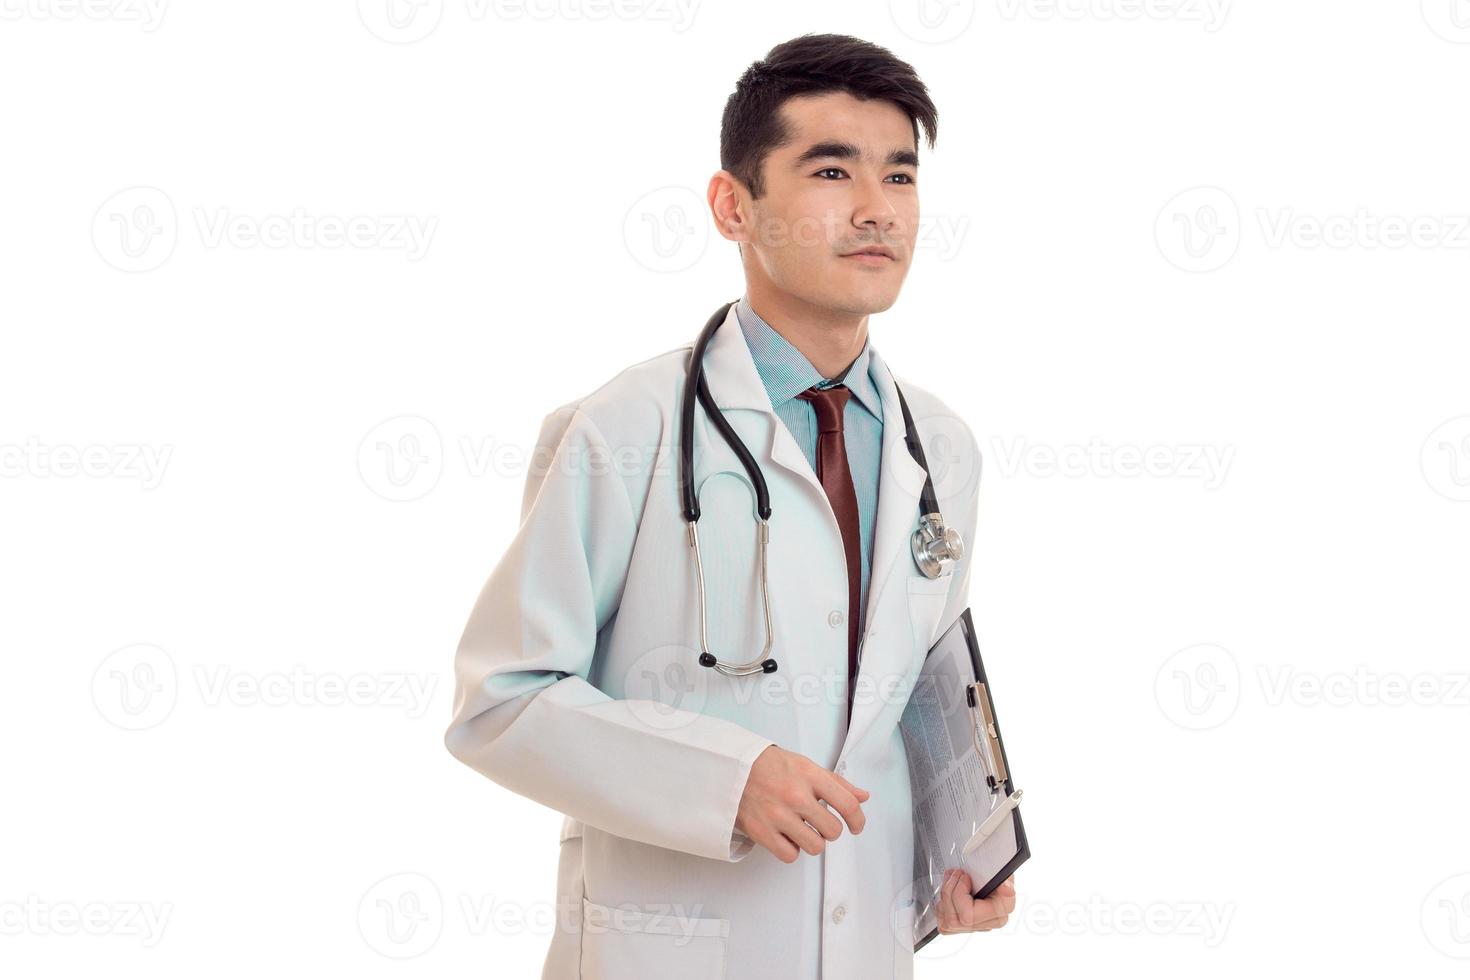 Doctor bastante masculino en estetoscopio uniforme posando aislado sobre fondo blanco. foto